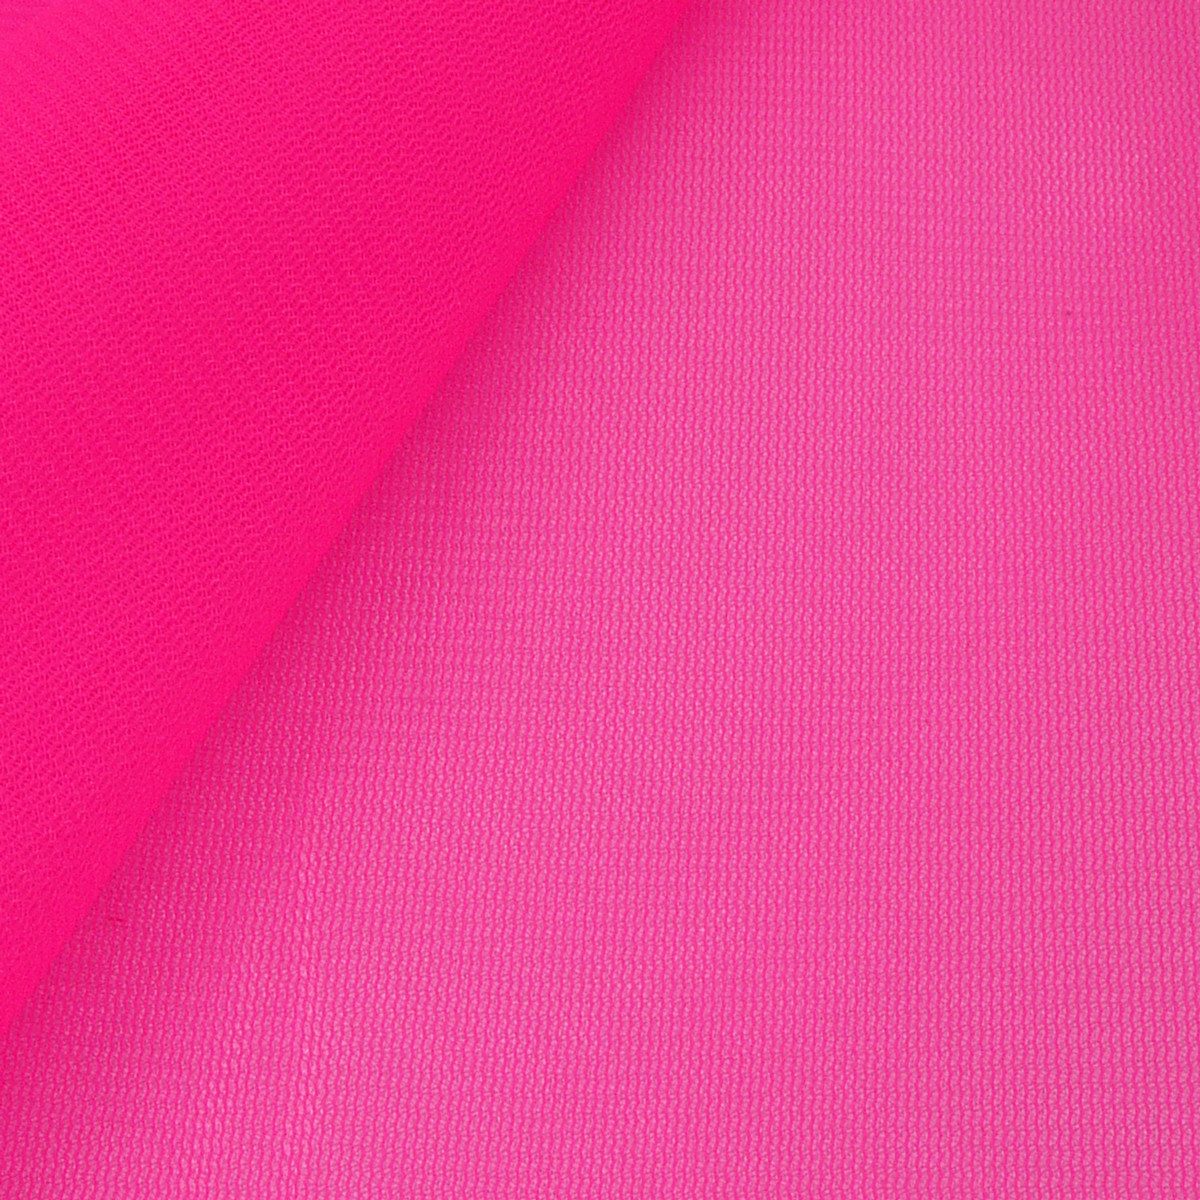 Stoff Tüll Petticoat pink 1,5m Breite